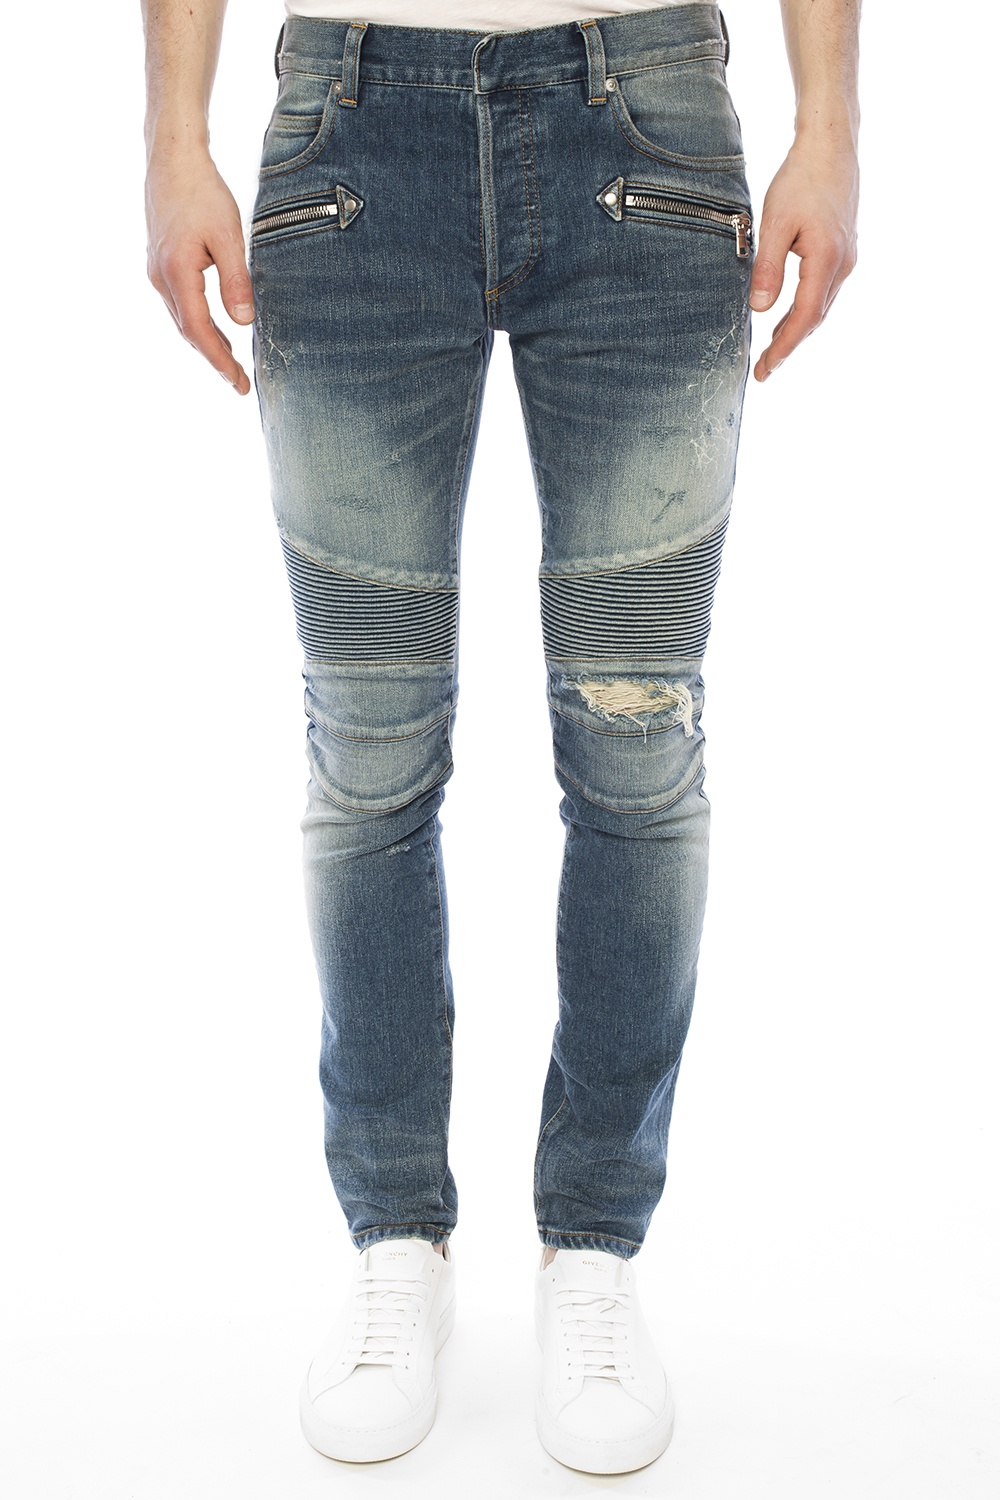 Blue Ripped jeans Balmain - Vitkac GB